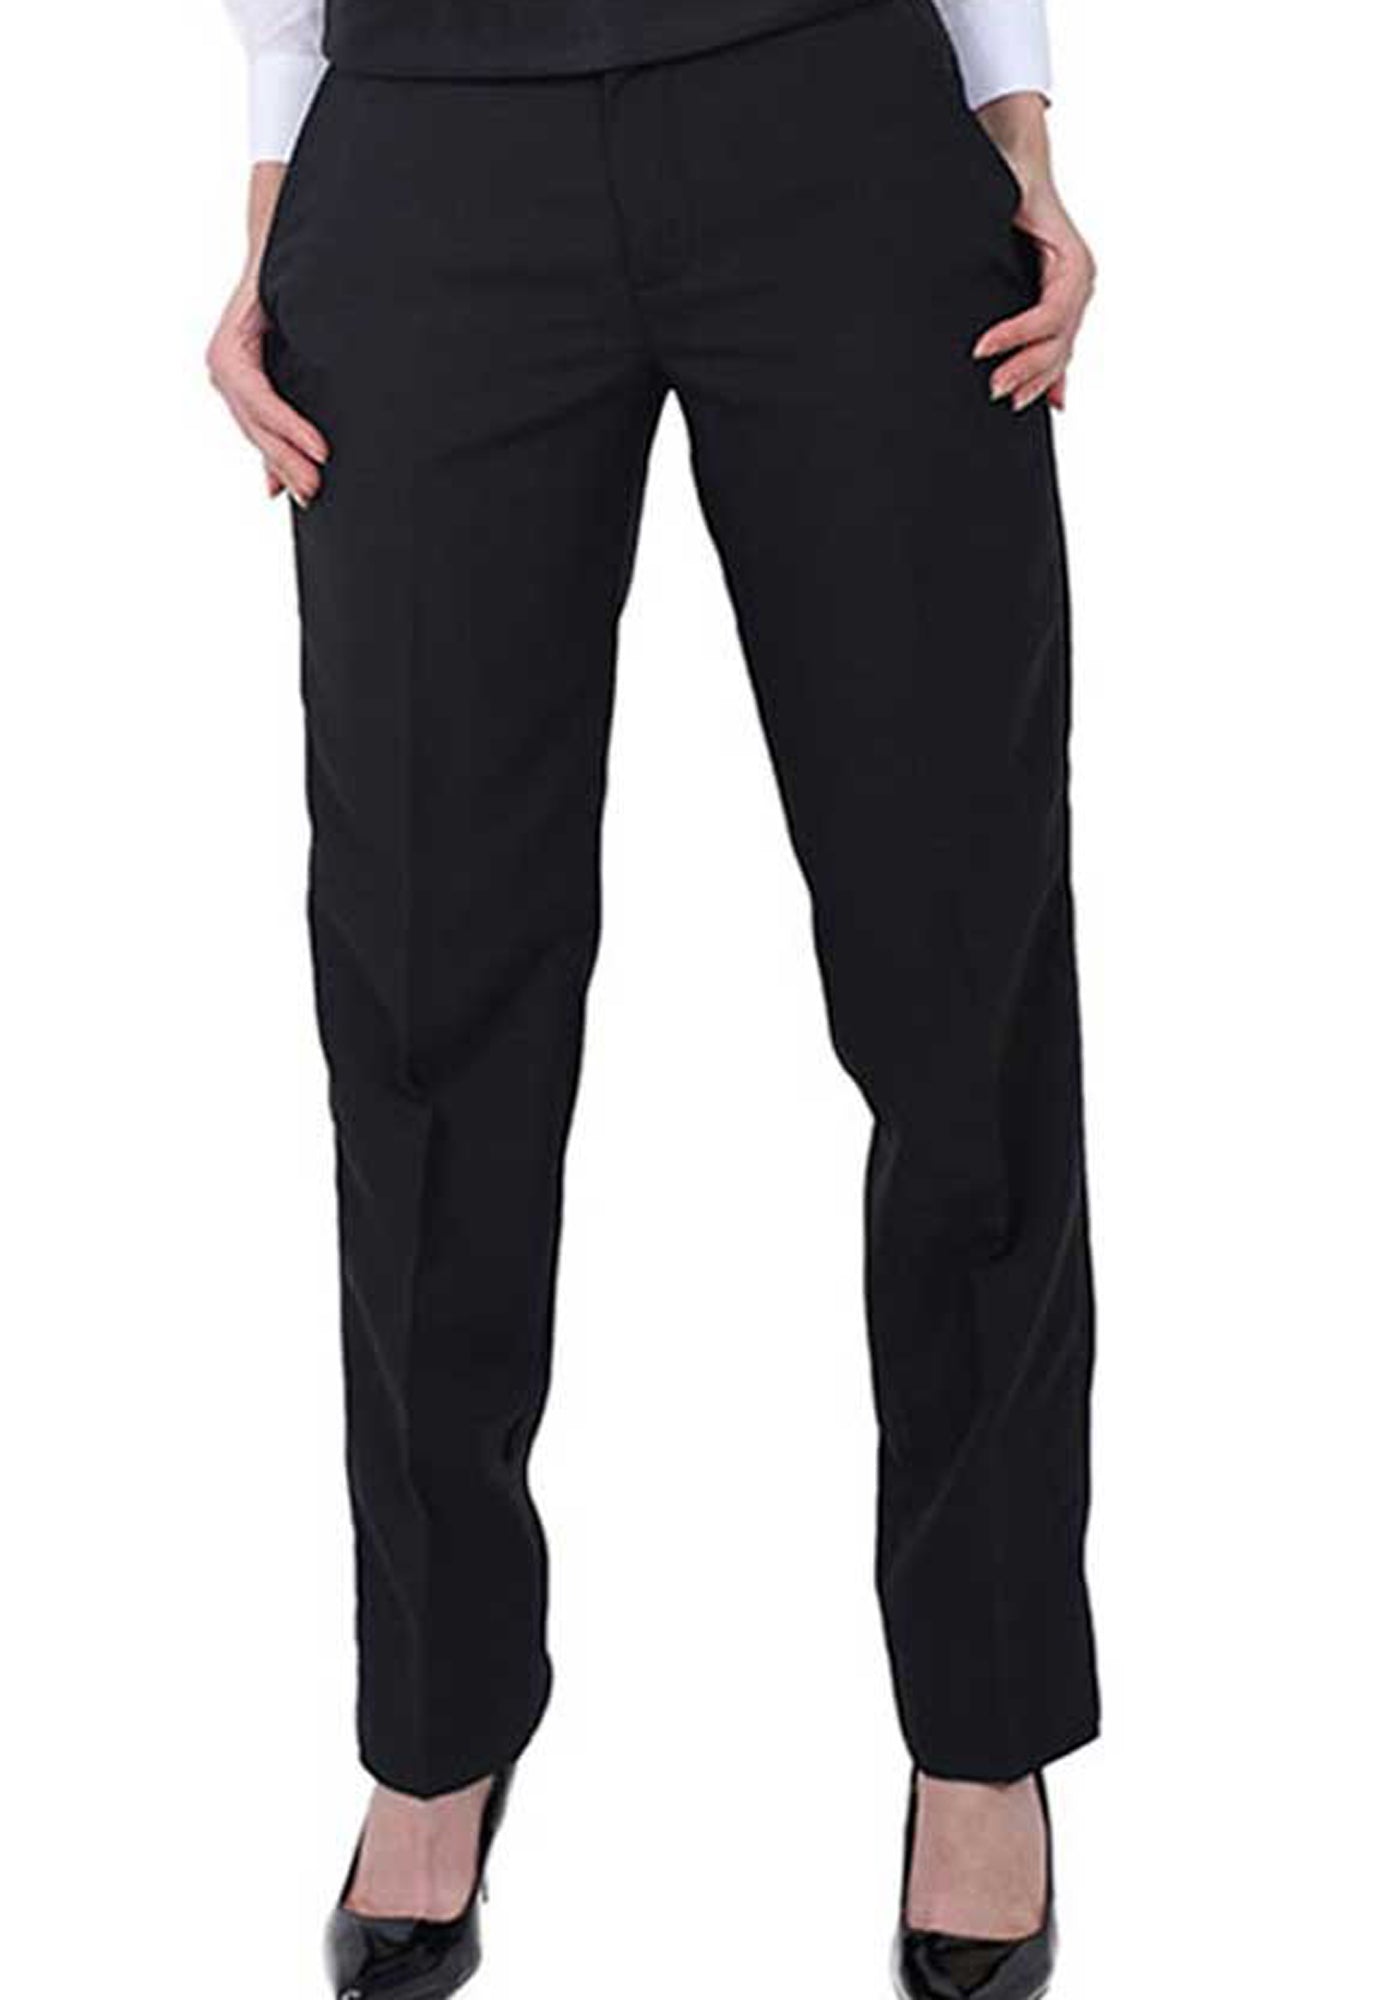 Ultra Slim Stretch Tailored Pant - Black | Suit Pants | Politix